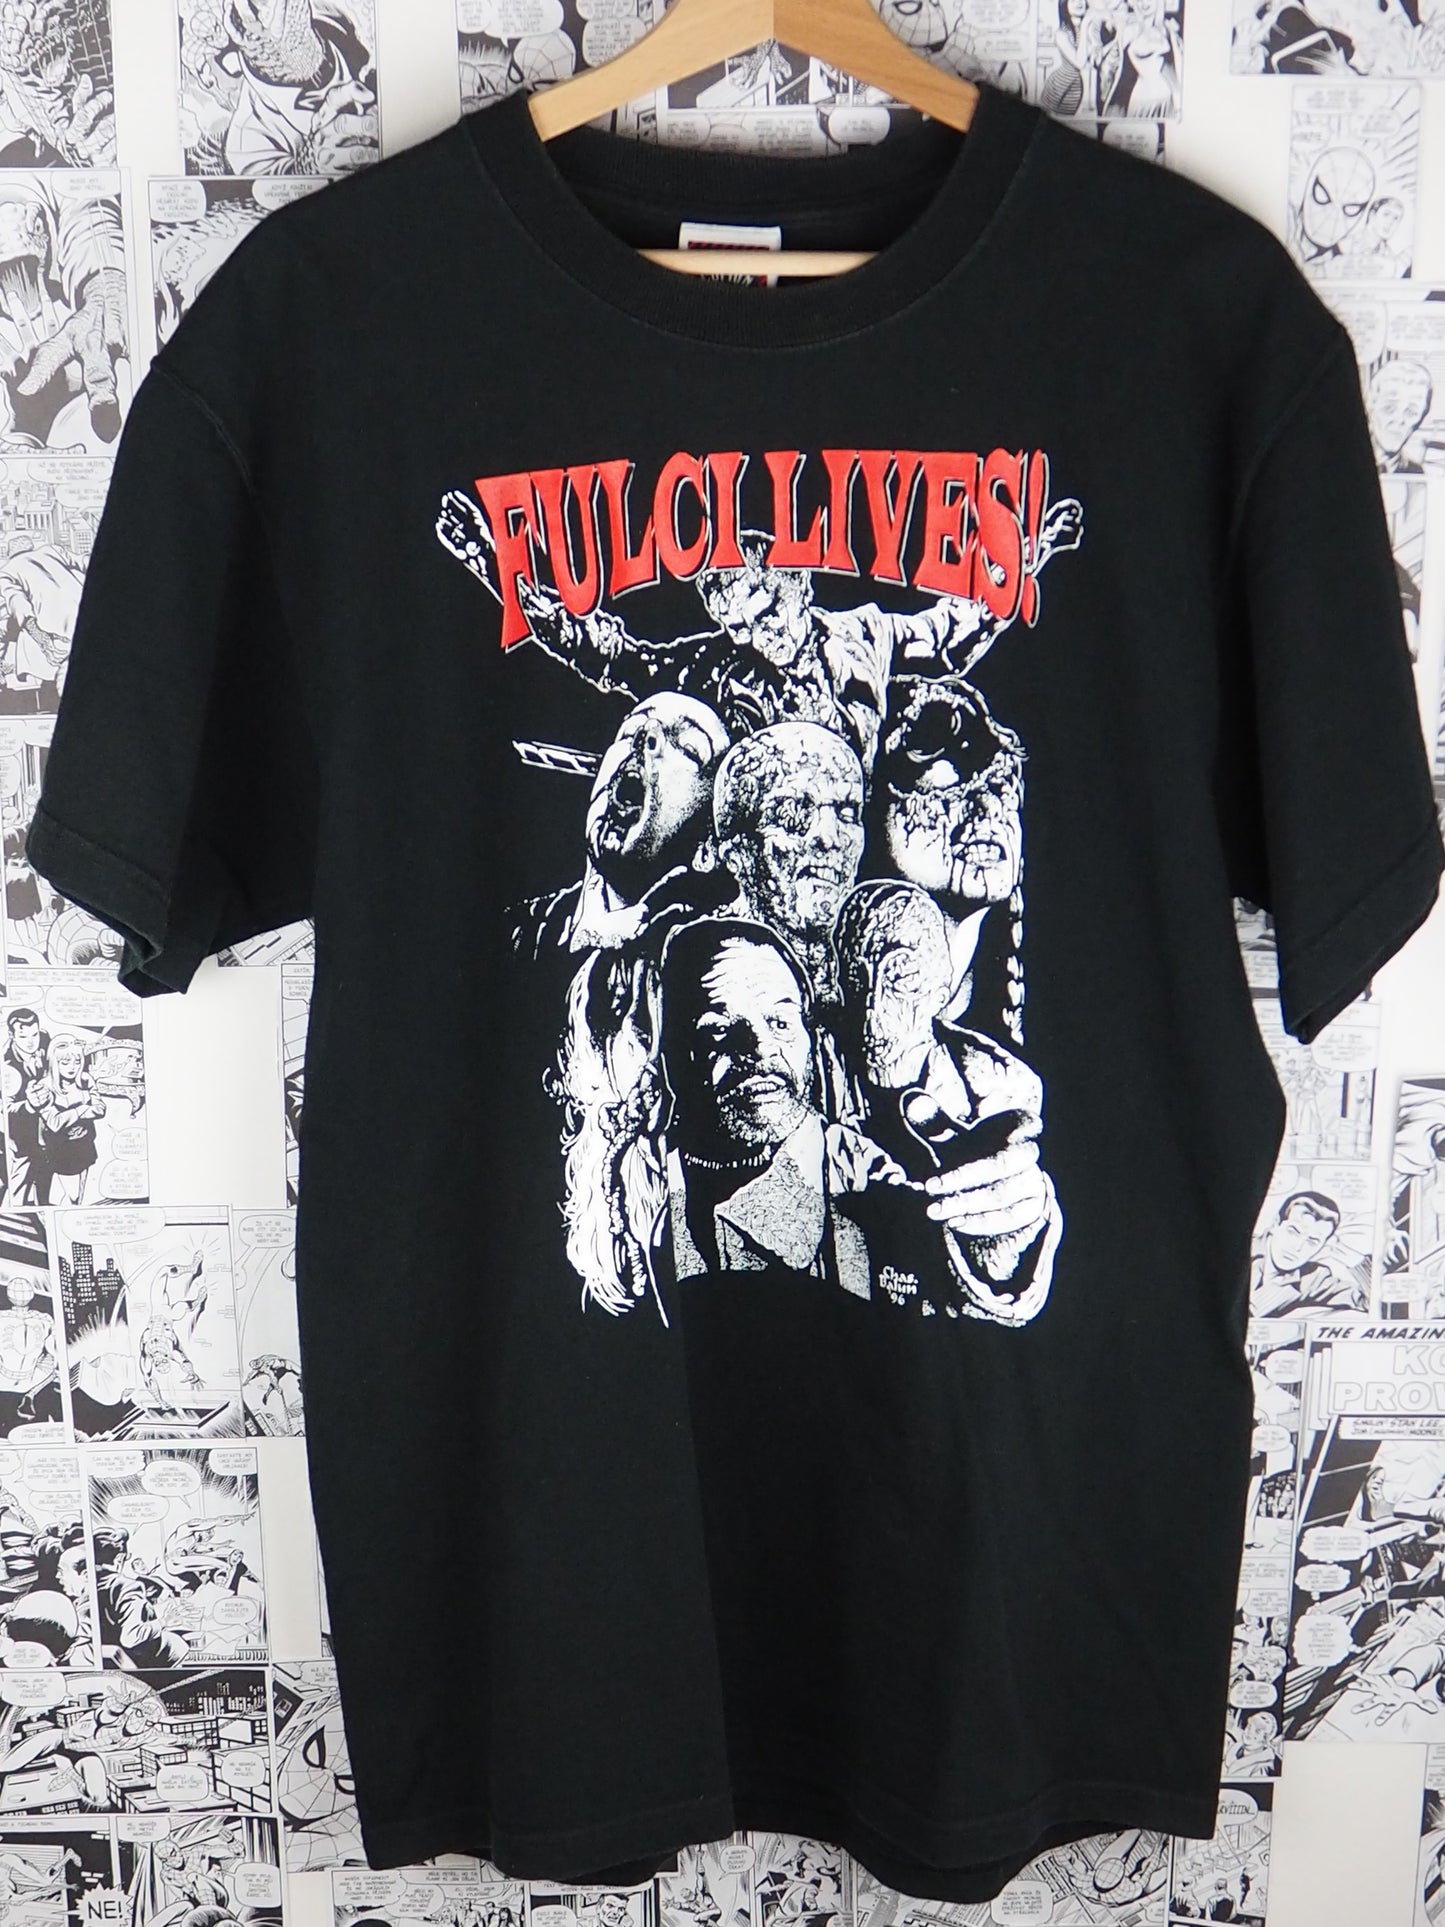 Vintage Lucio Fulci lives - 1996 t-shirt